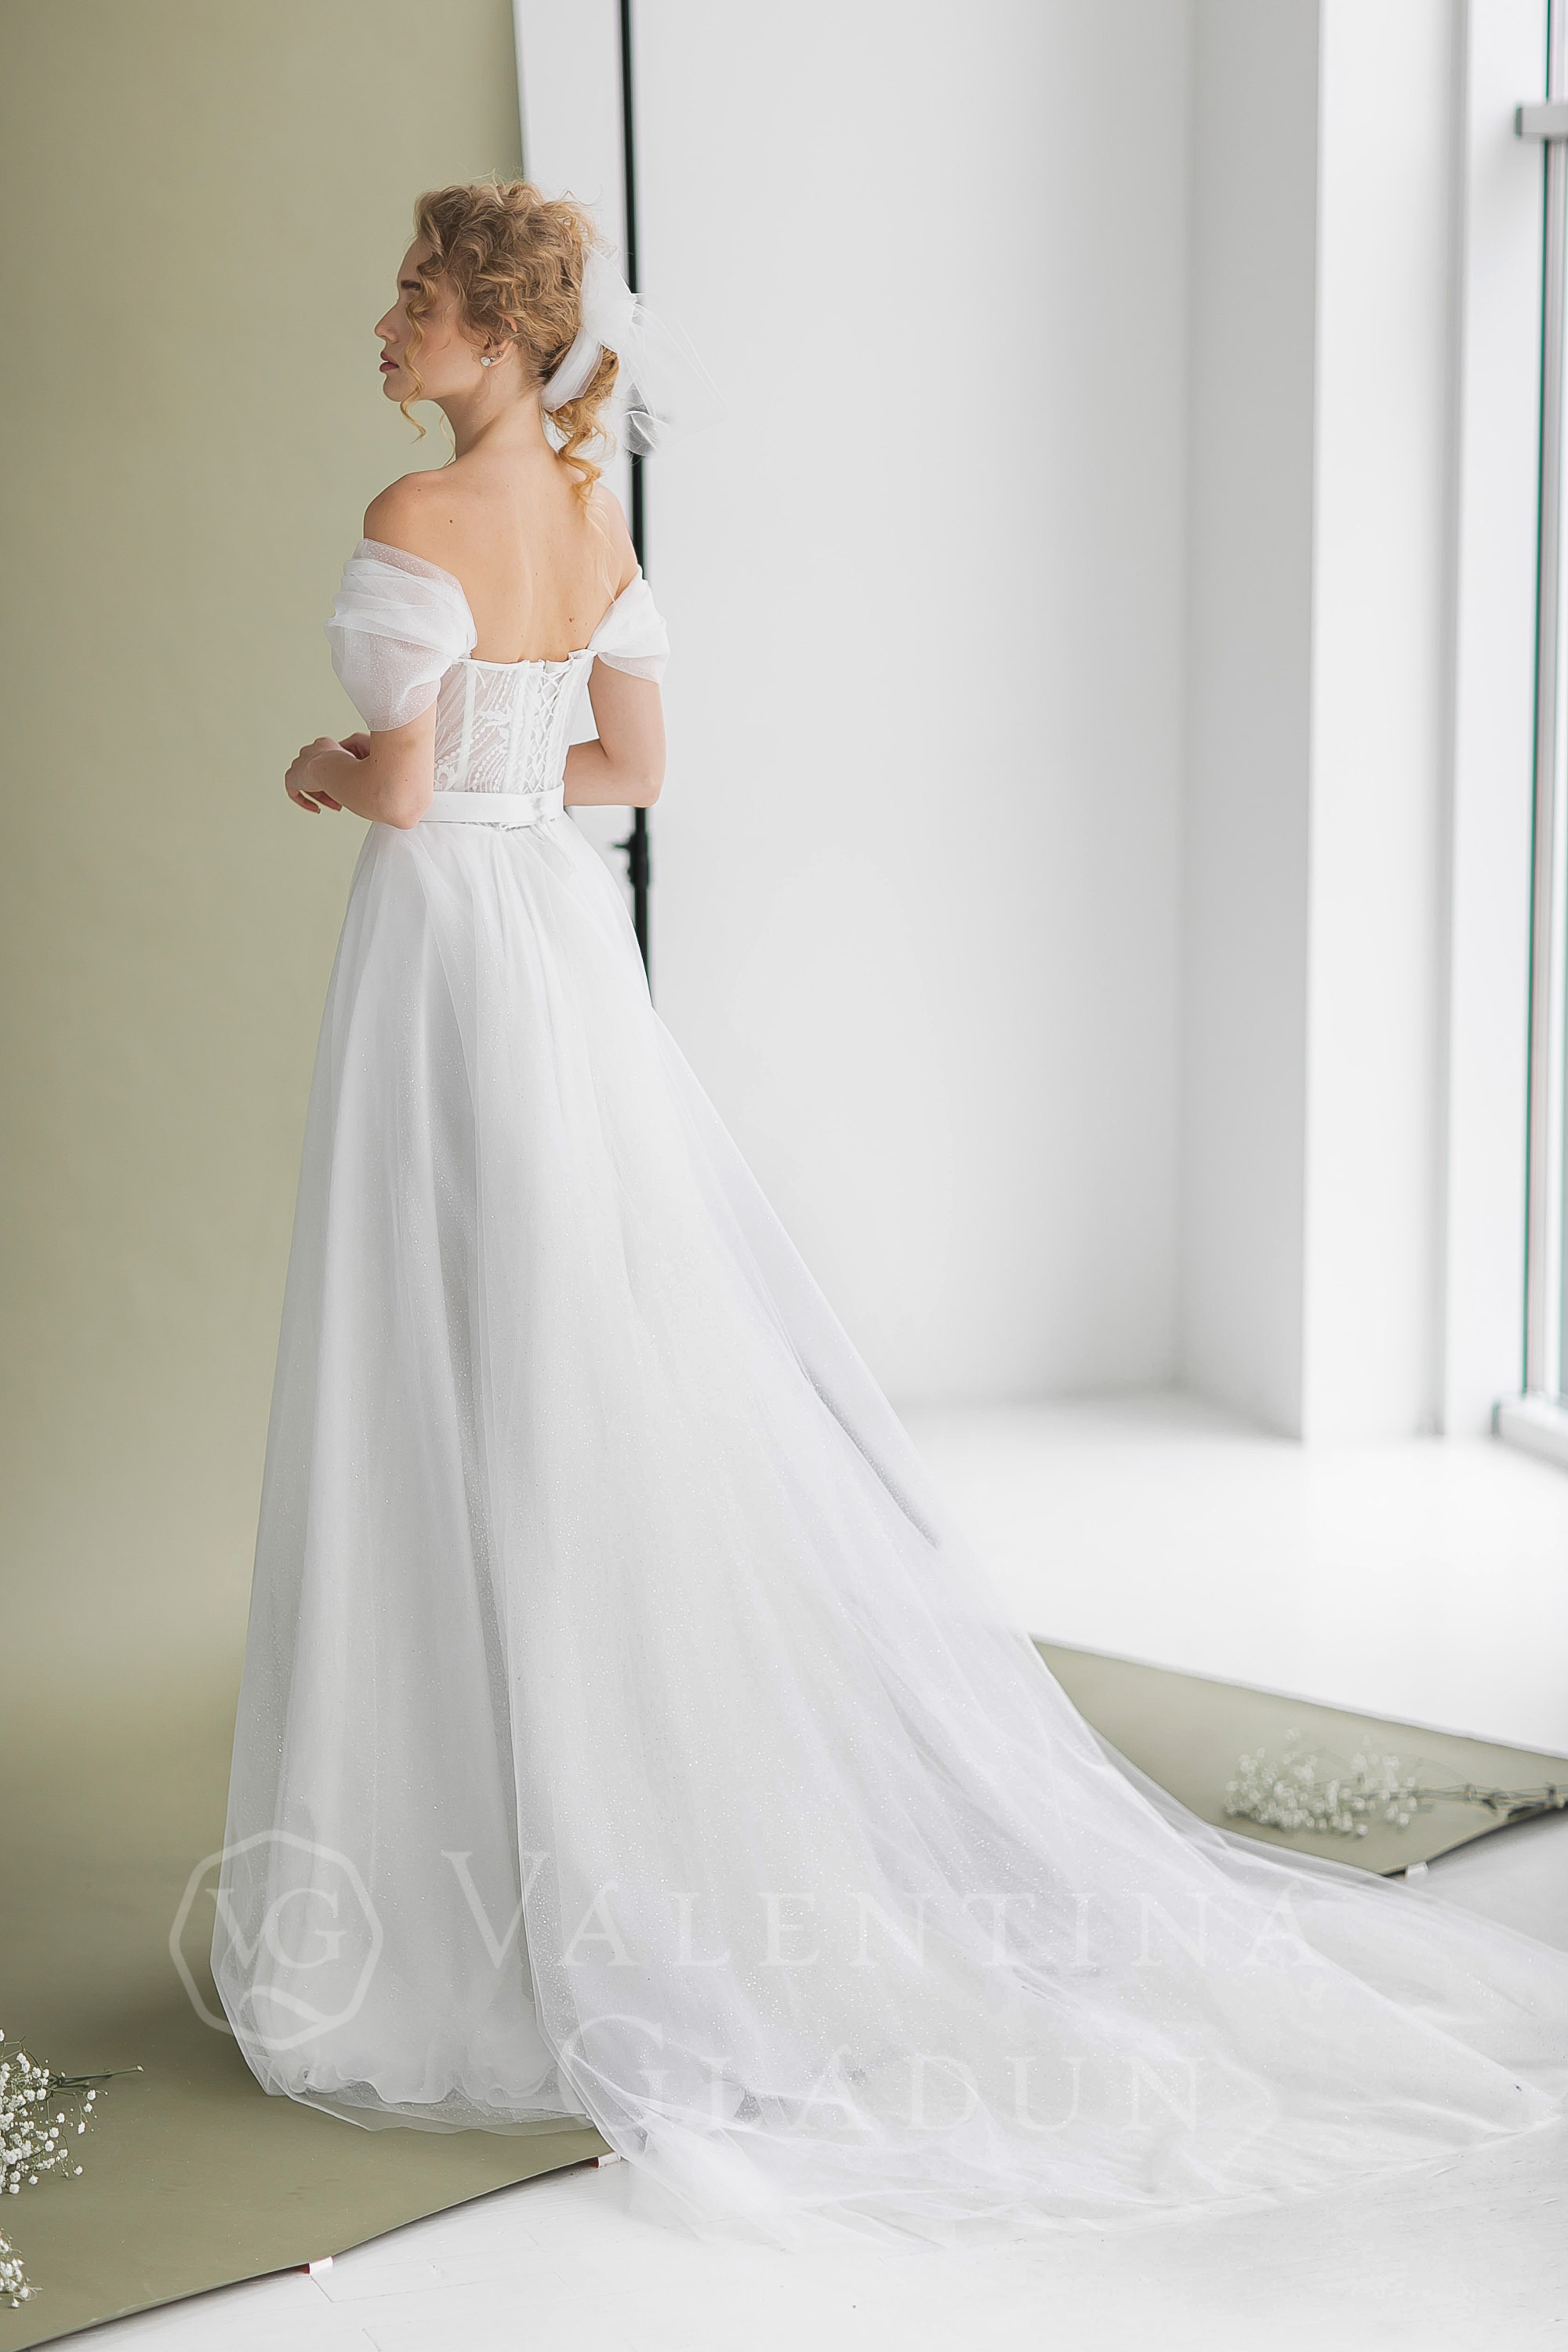 Chelles Valentina Gladun wedding dress 2021